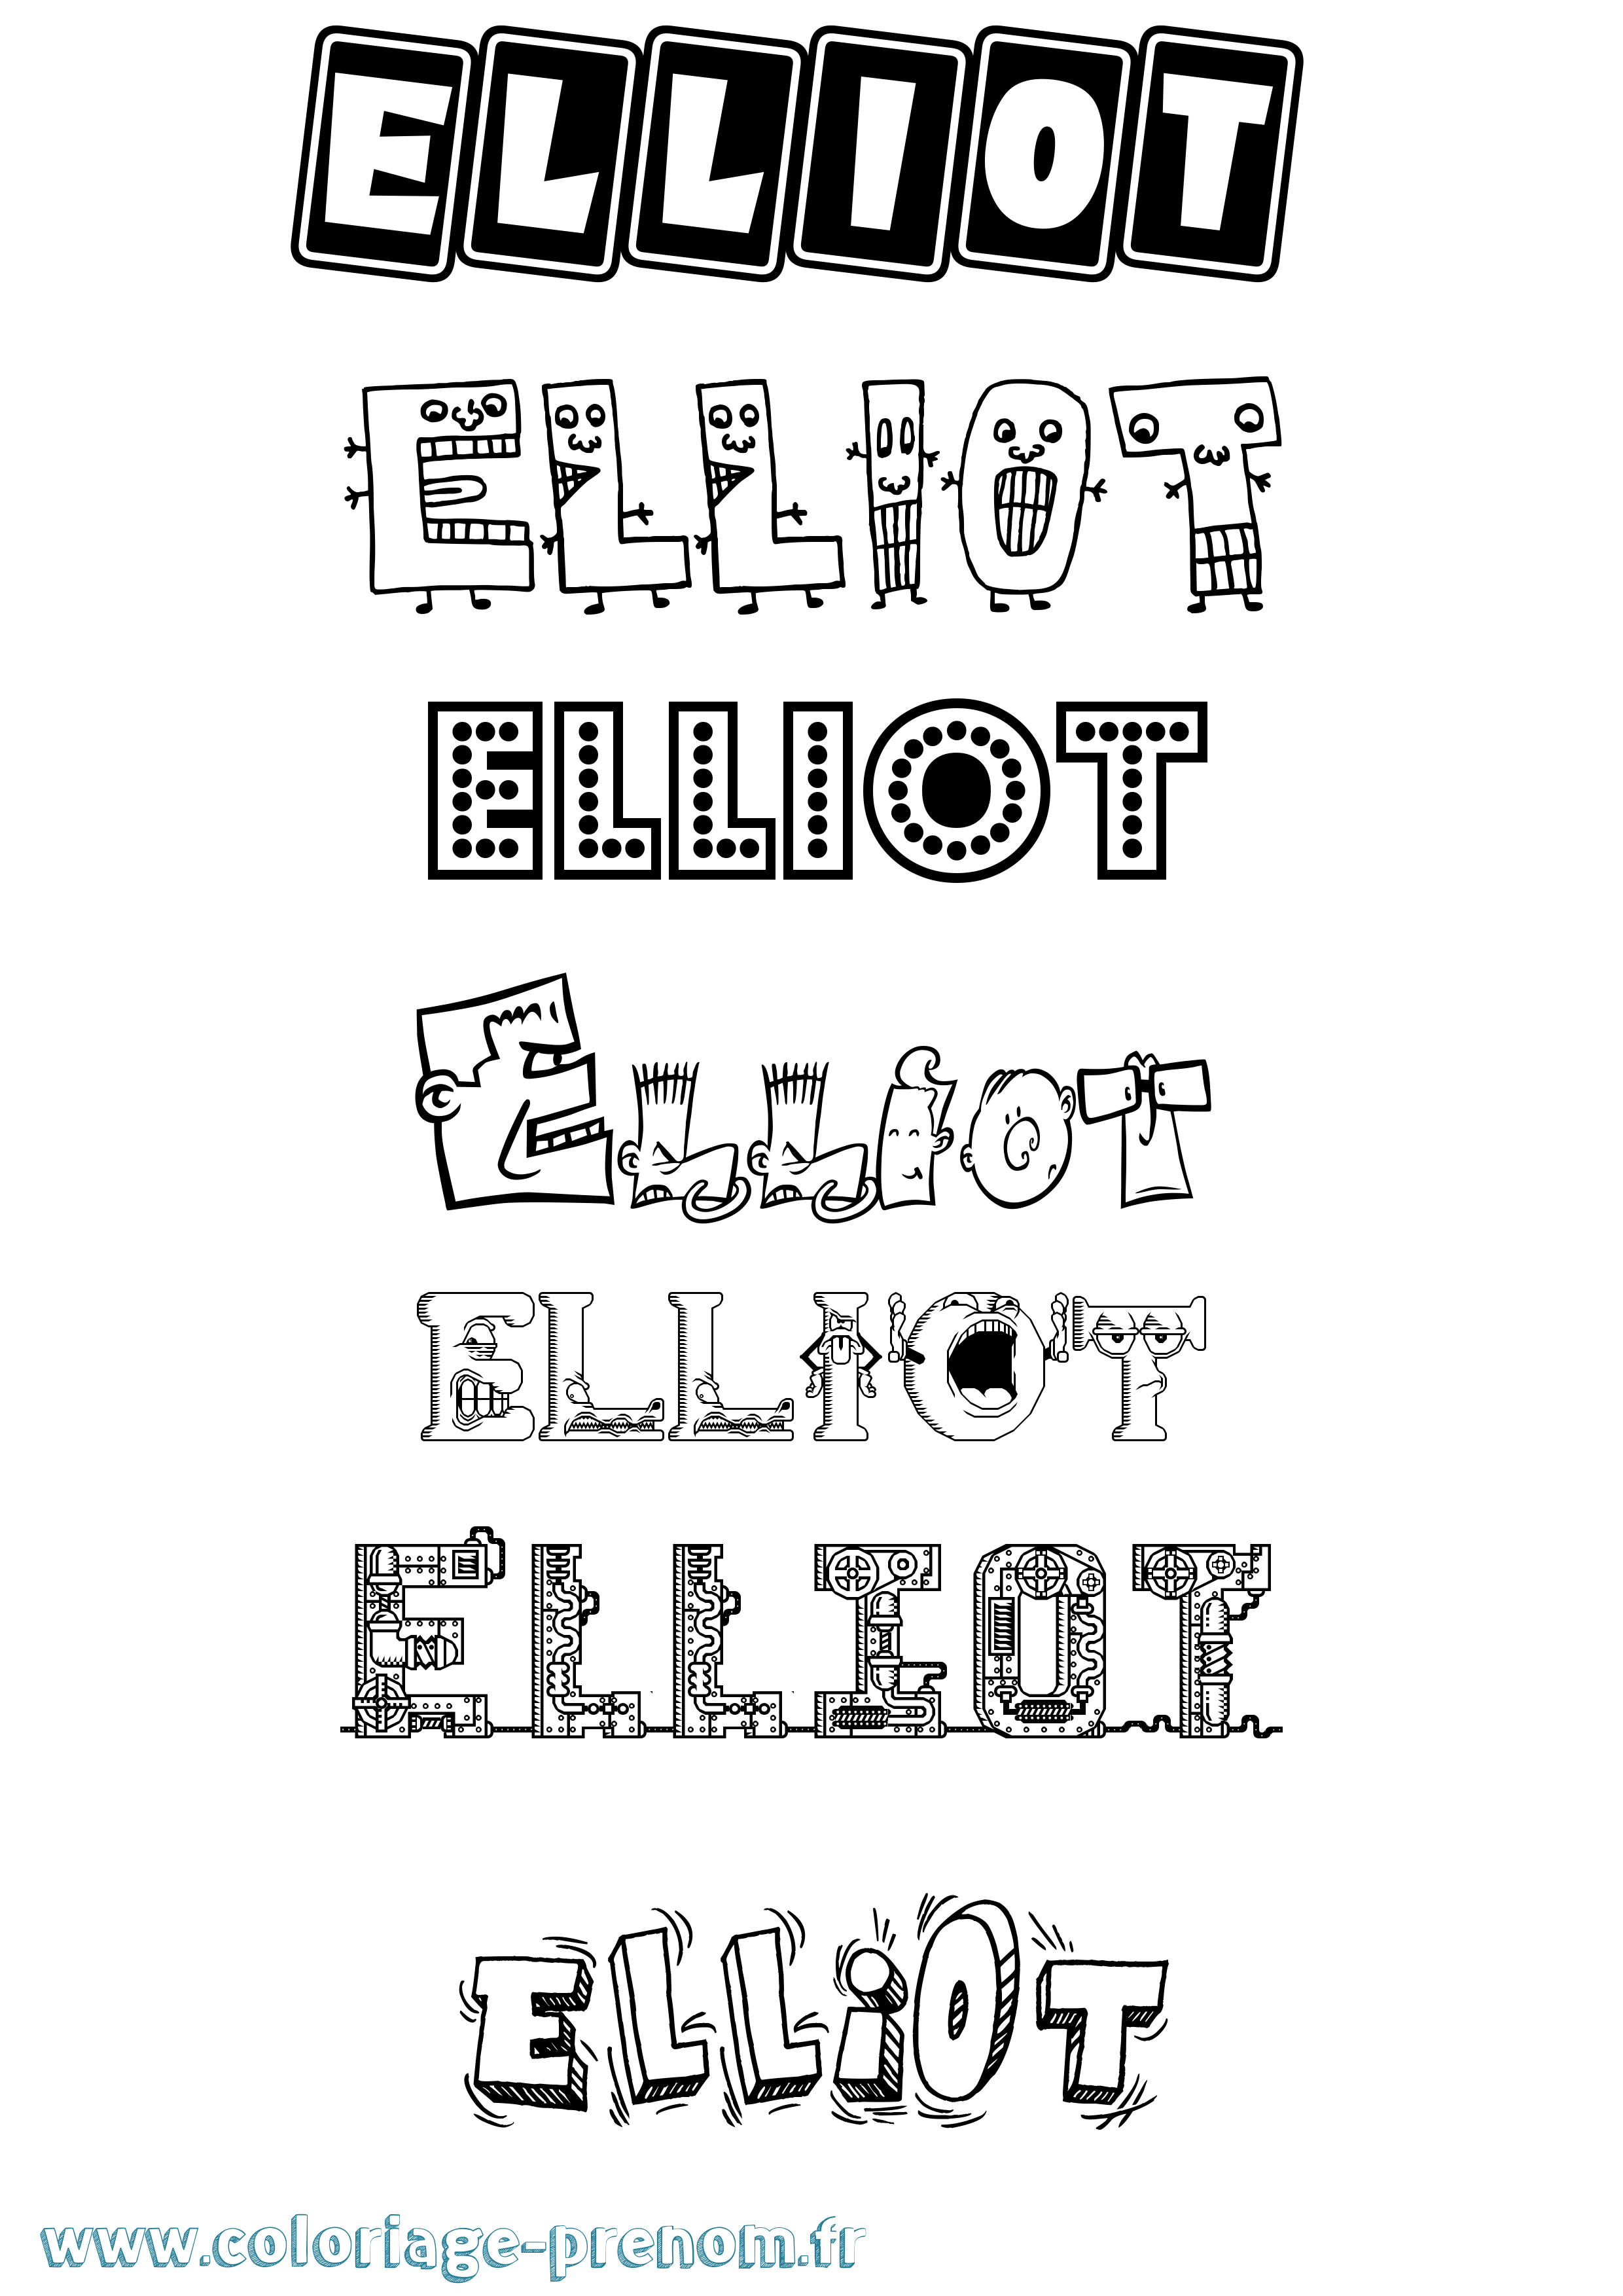 Coloriage prénom Elliot